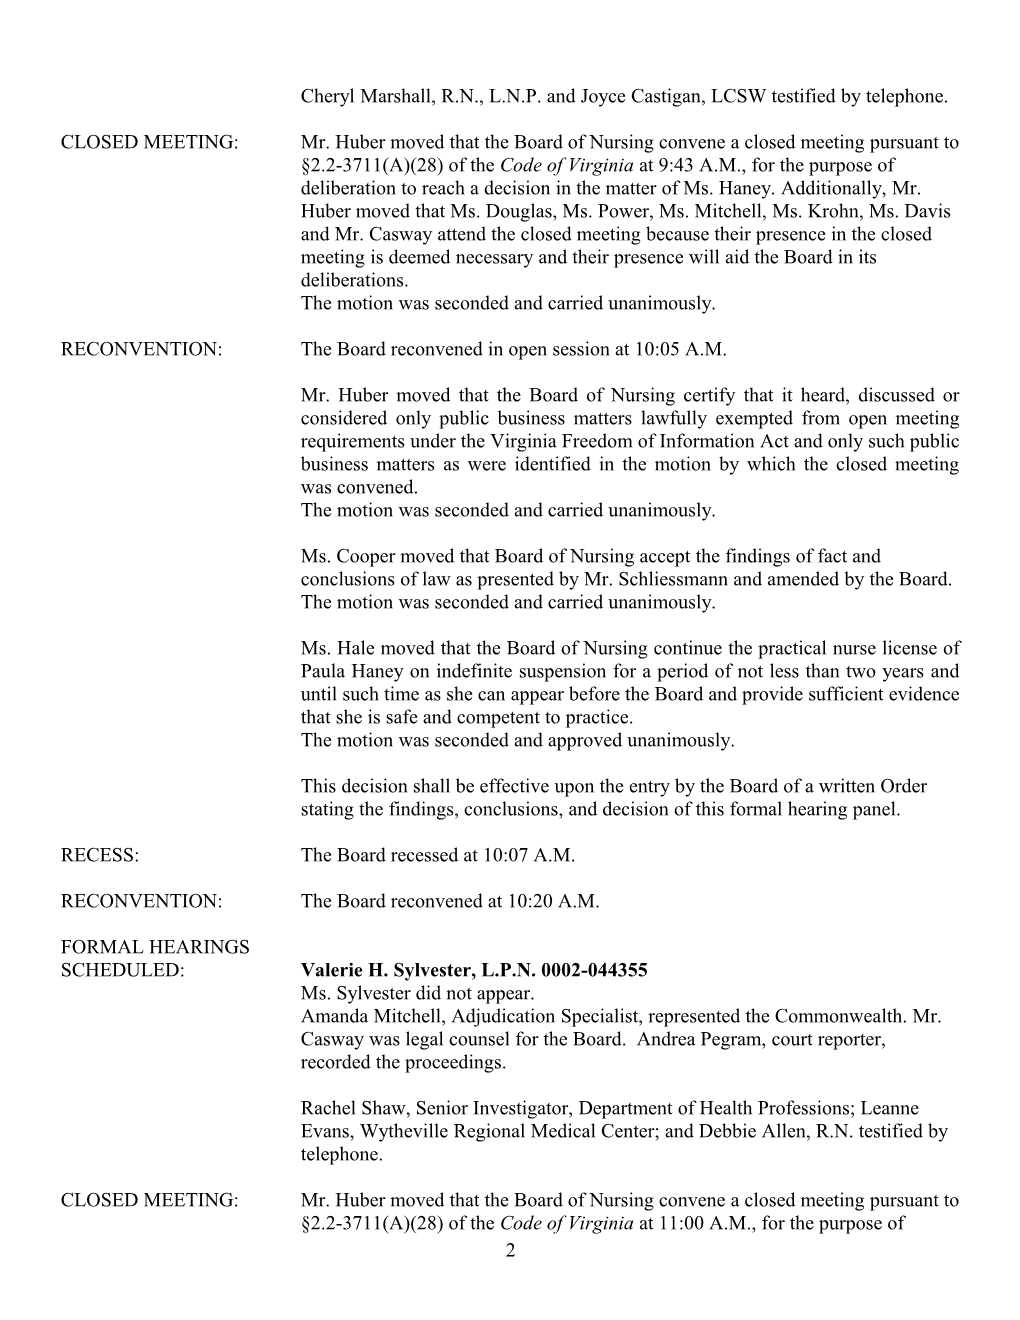 Nursing-Minutes of May 16, 2007, Formal Hearings